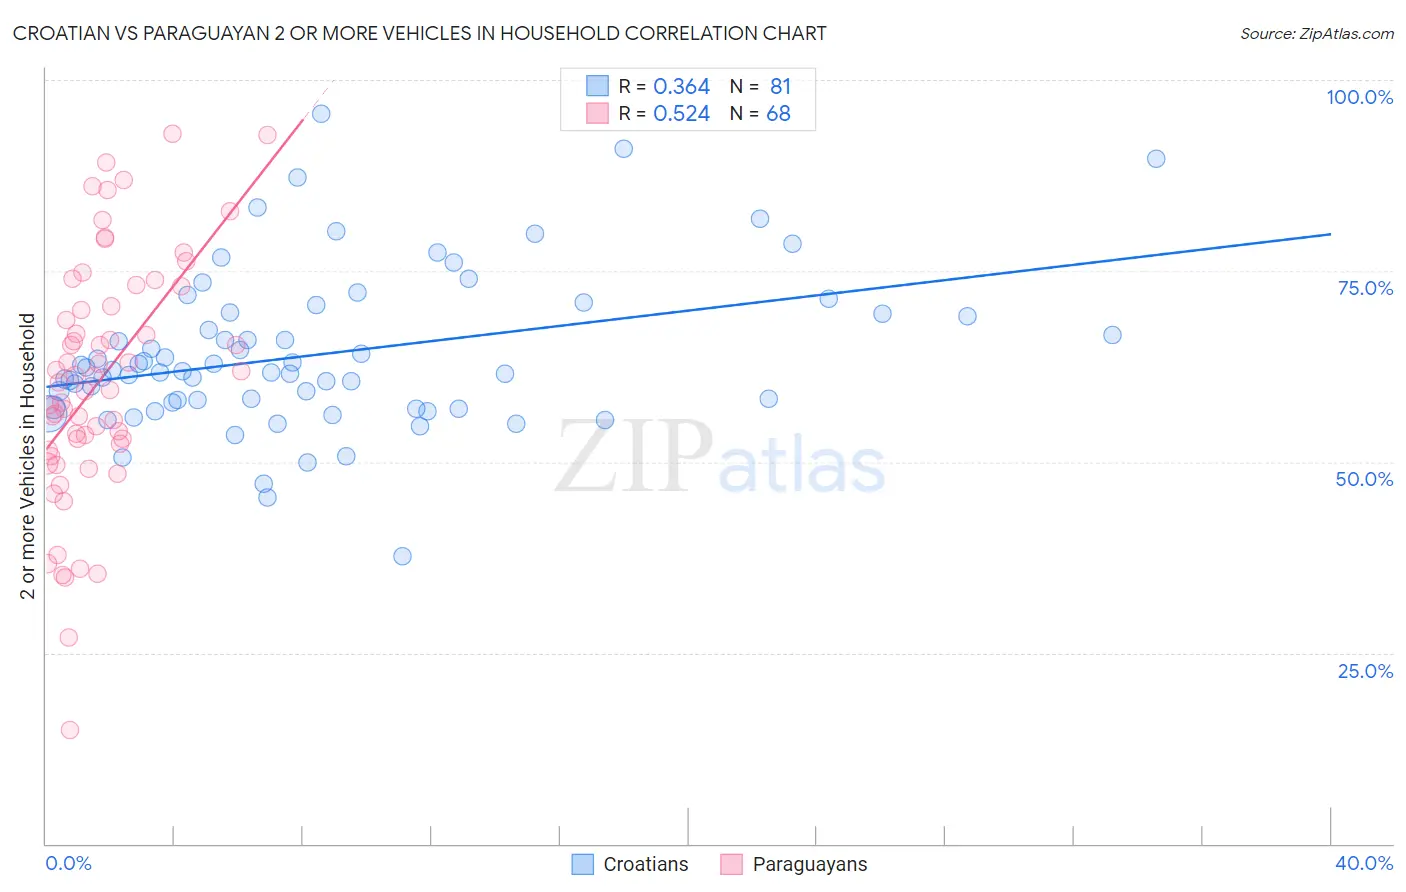 Croatian vs Paraguayan 2 or more Vehicles in Household